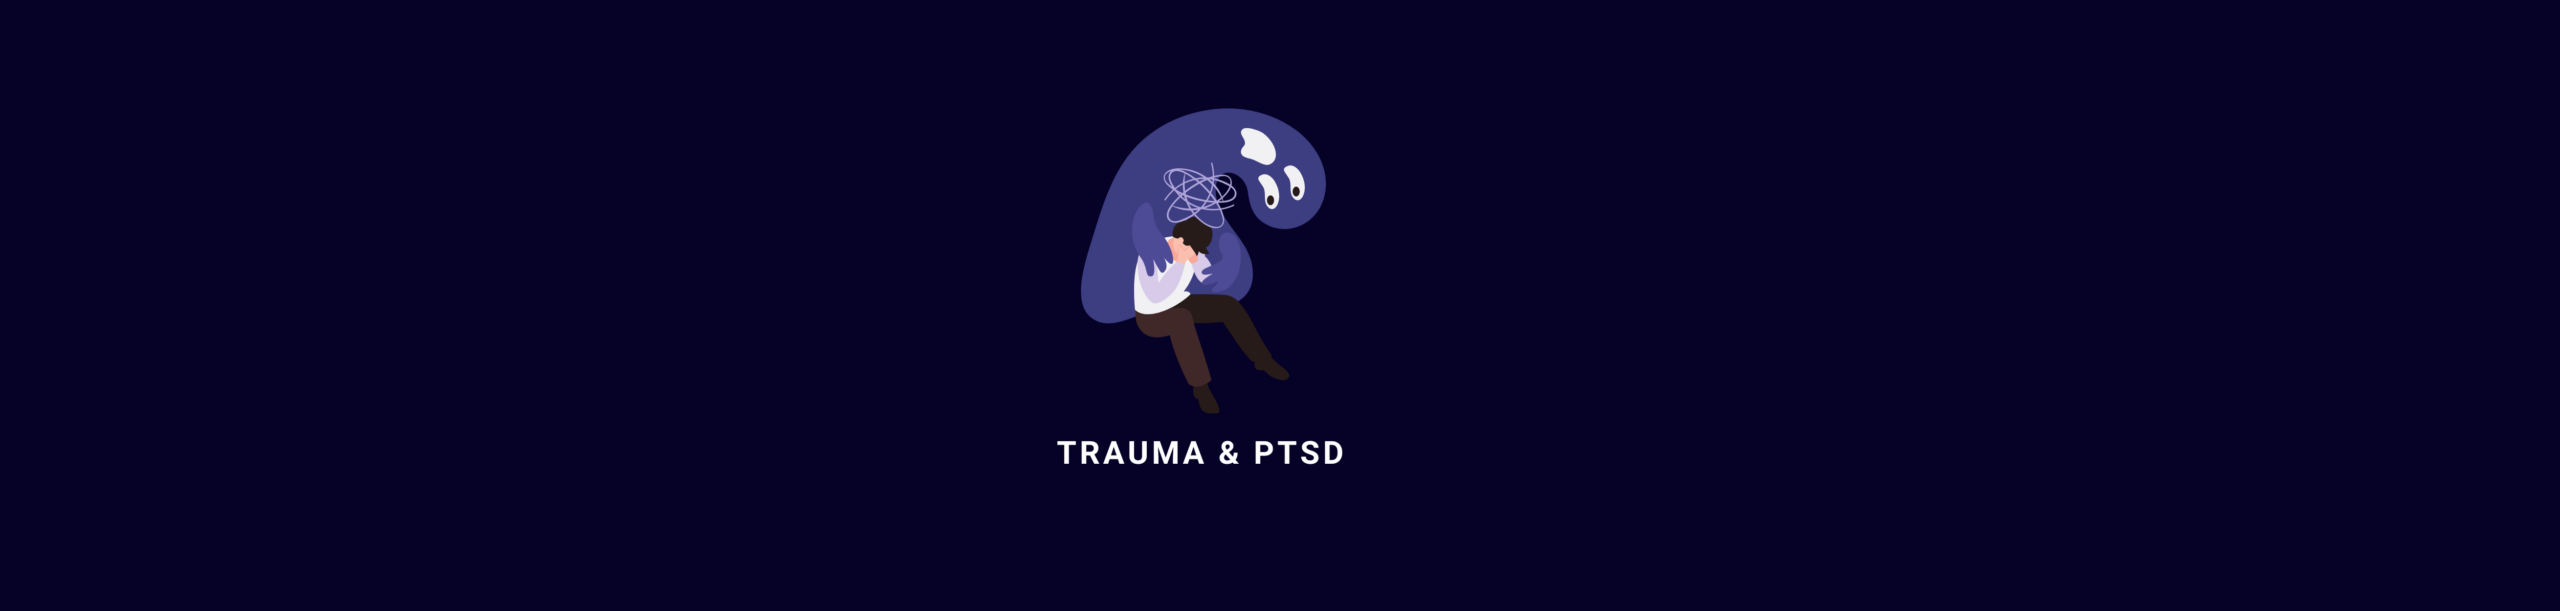 Trauma & PTSD - Kalpalatha Thiyagarajan Kalm Wellness Centre and Counselling Services